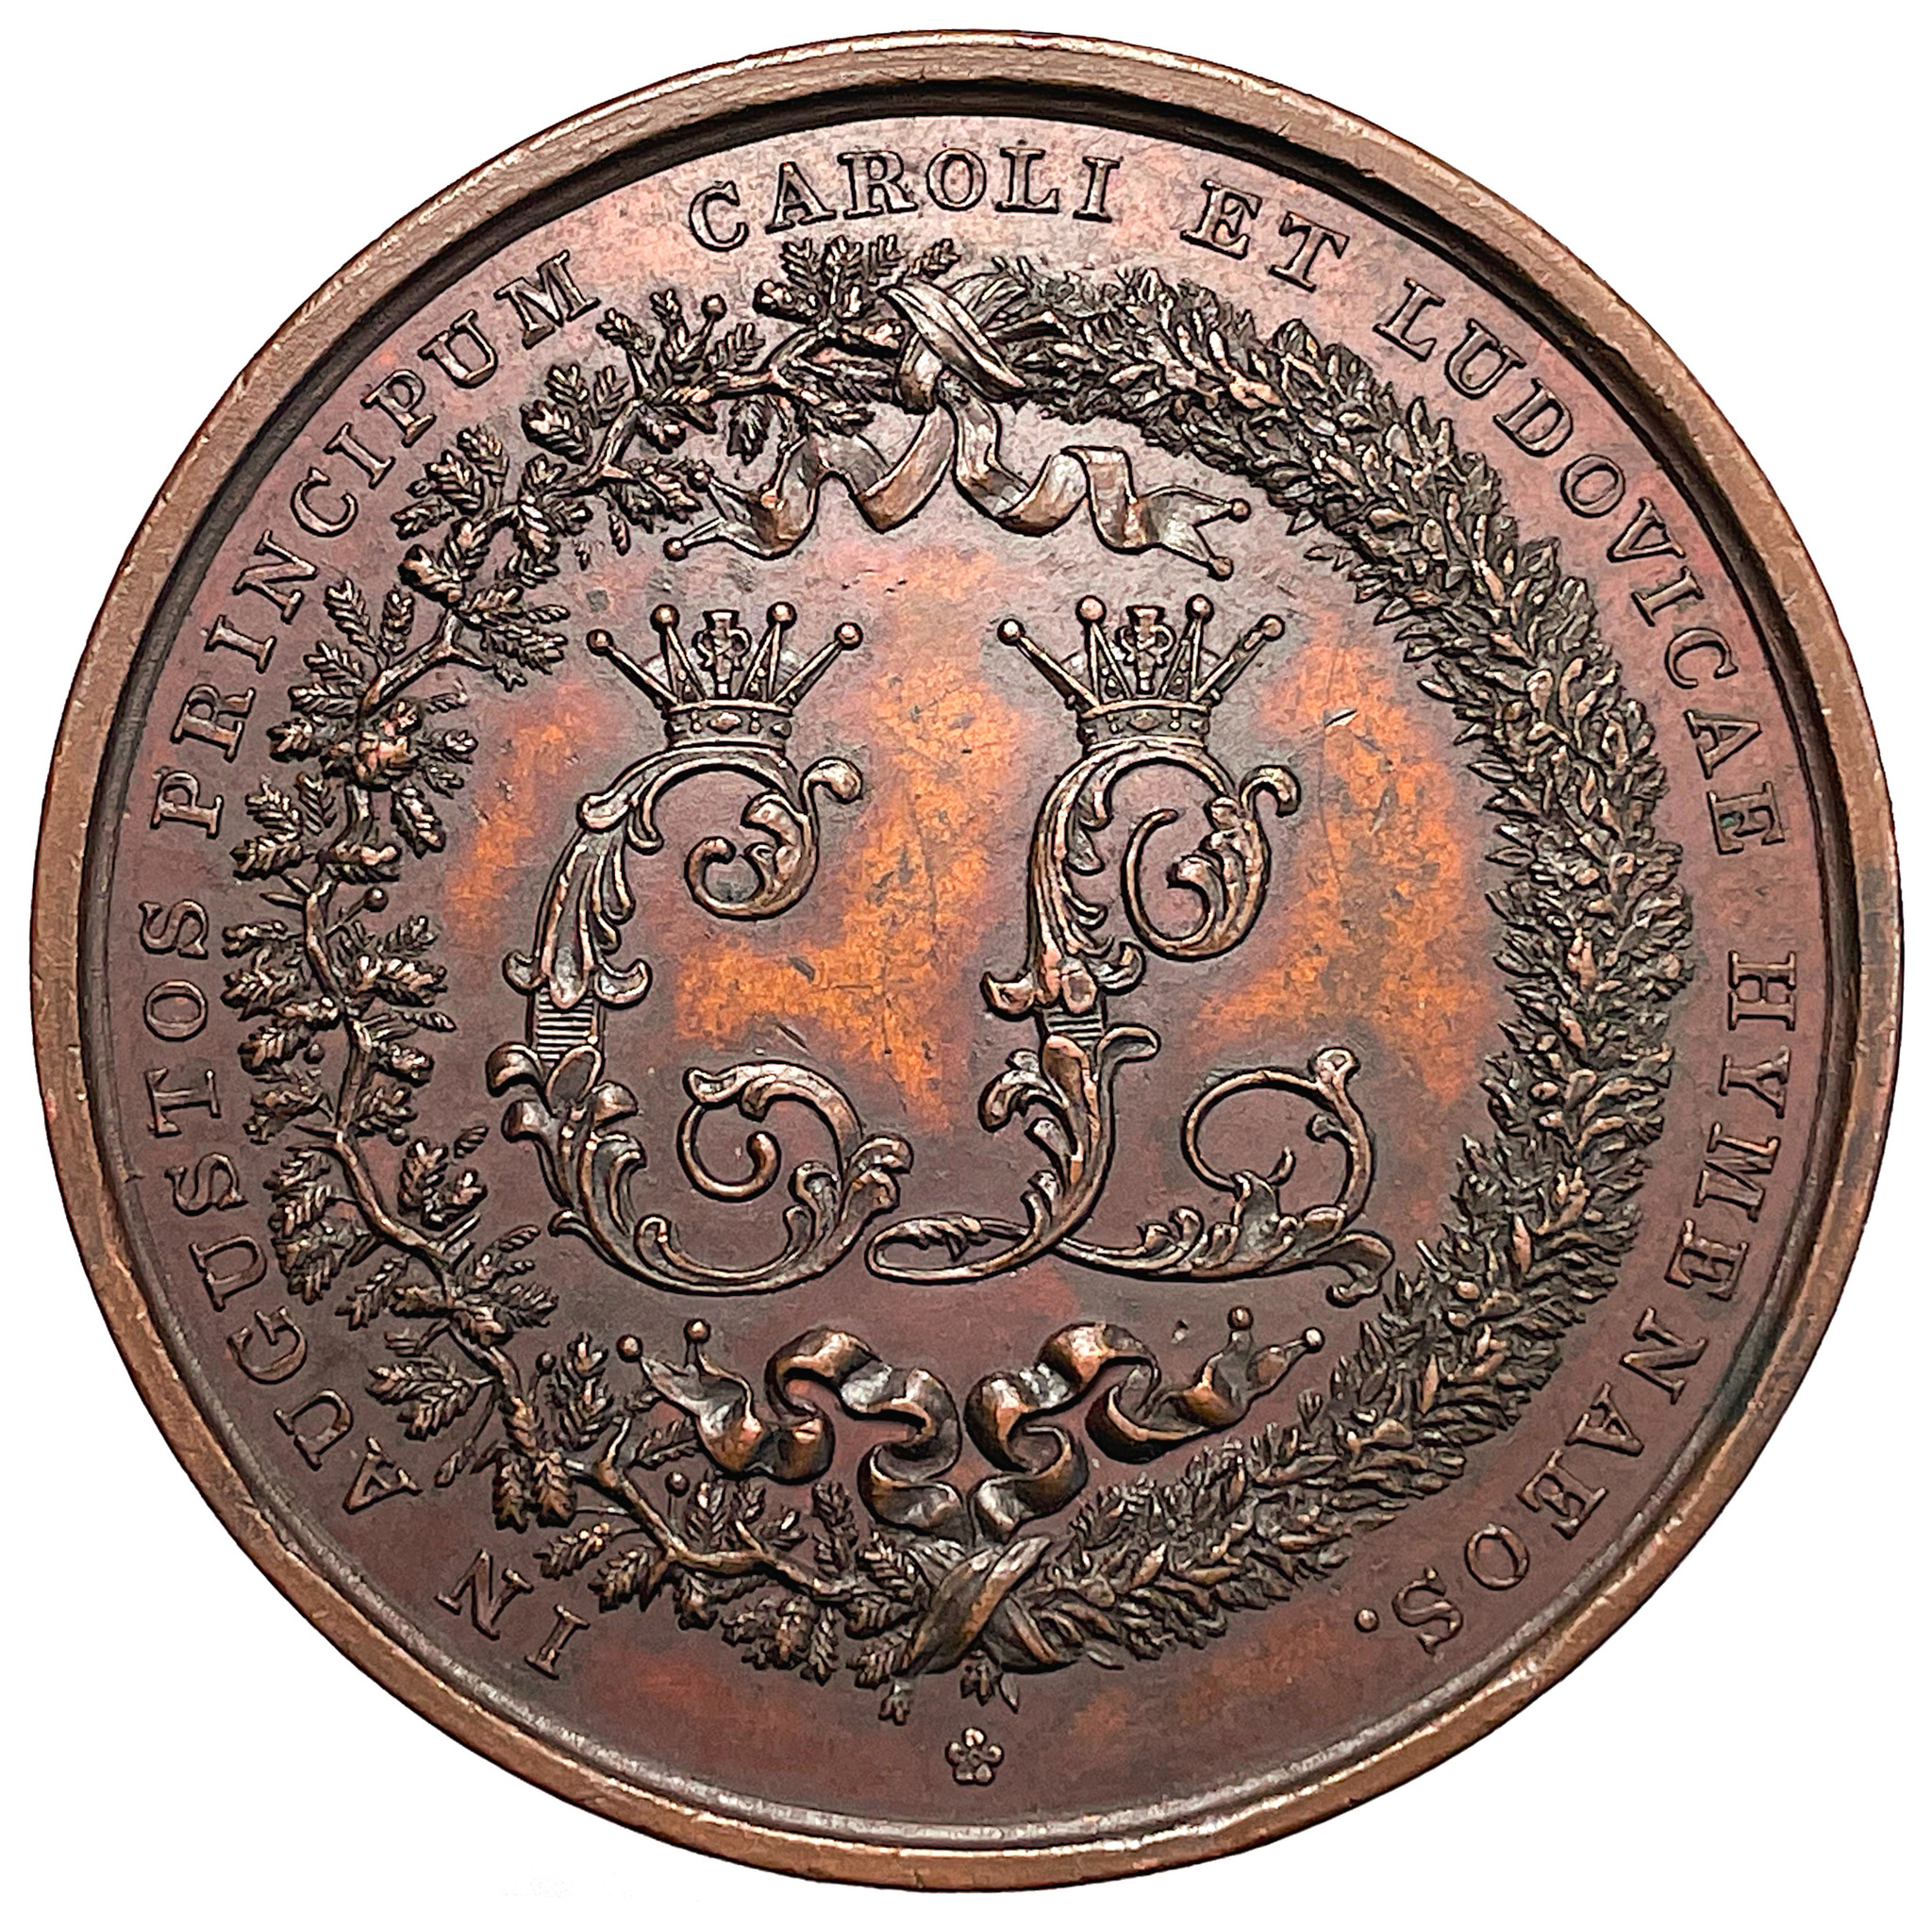 Sverige, Kronprins Karls (XV) giftermål med Lovisa den 19 juni 1850 av Per Henrik Lundgren - RR i brons